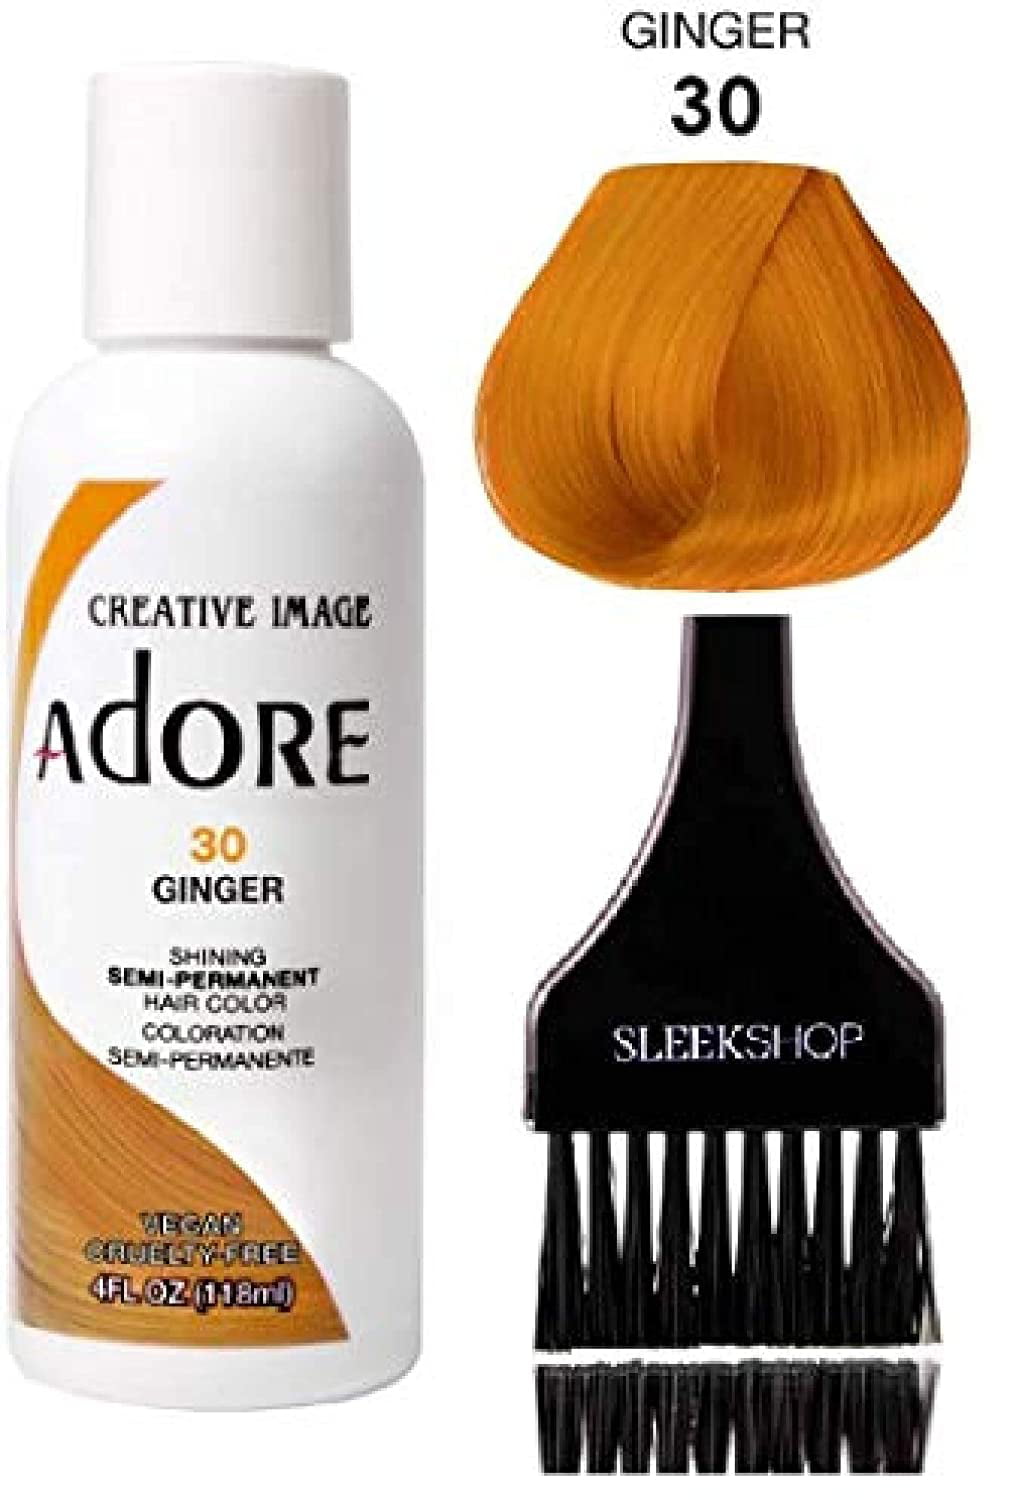 Creative Images Systems Adore SemiPermanent Hair Color 72 PAPRIKA   BEAUTY TALK LA   Walmartcom